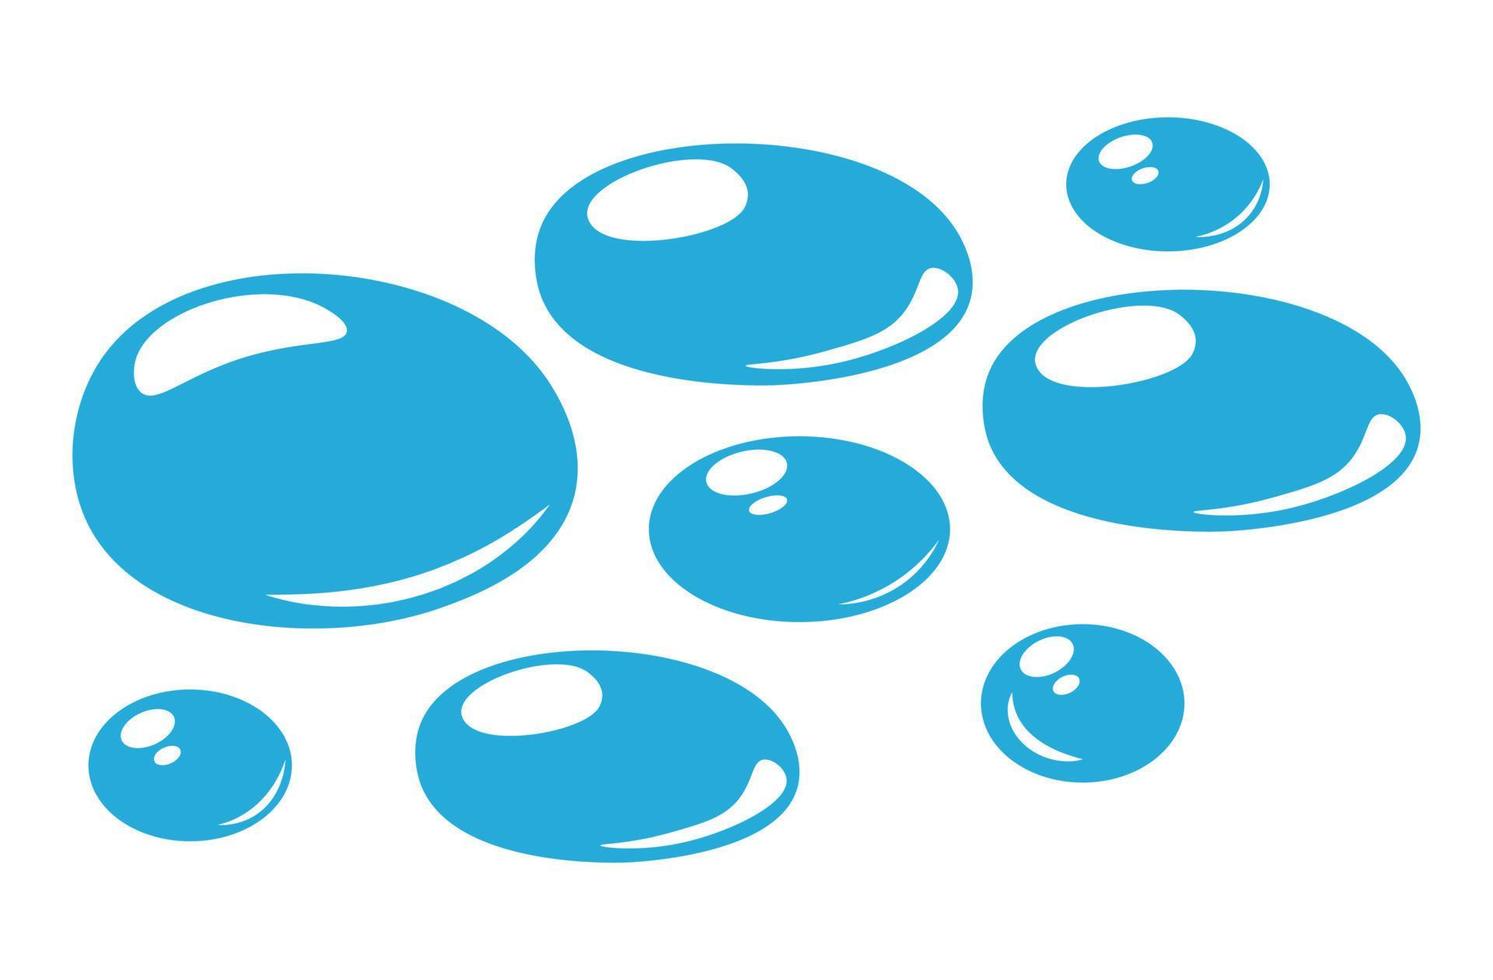 design av blå vatten droppar. isolerat element. vektor illustration i platt stil